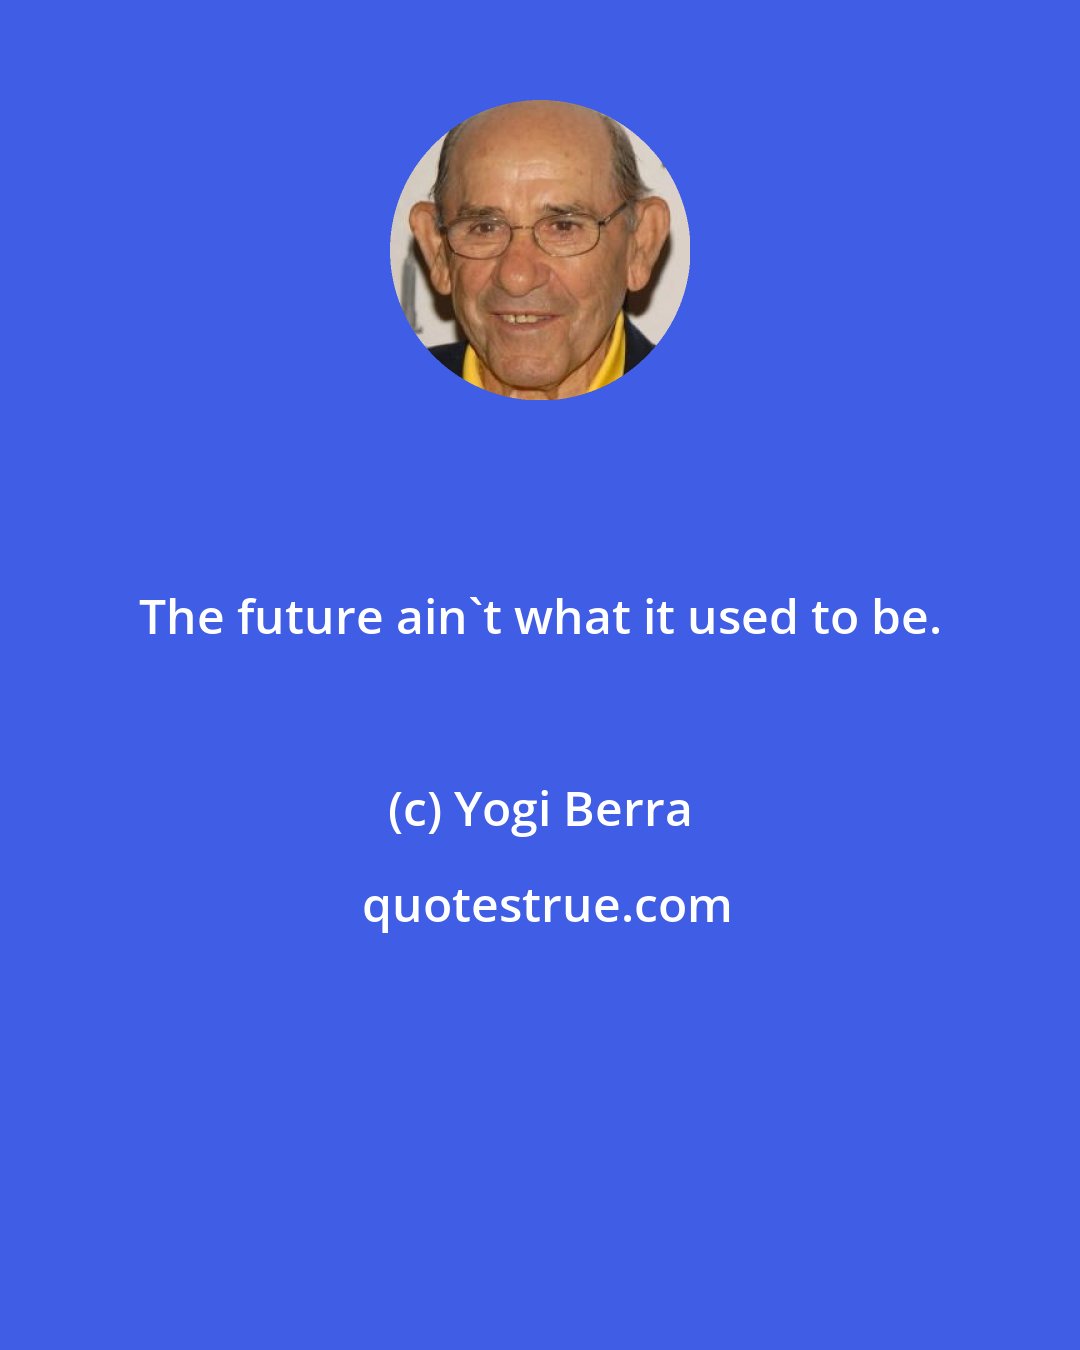 Yogi Berra: The future ain't what it used to be.